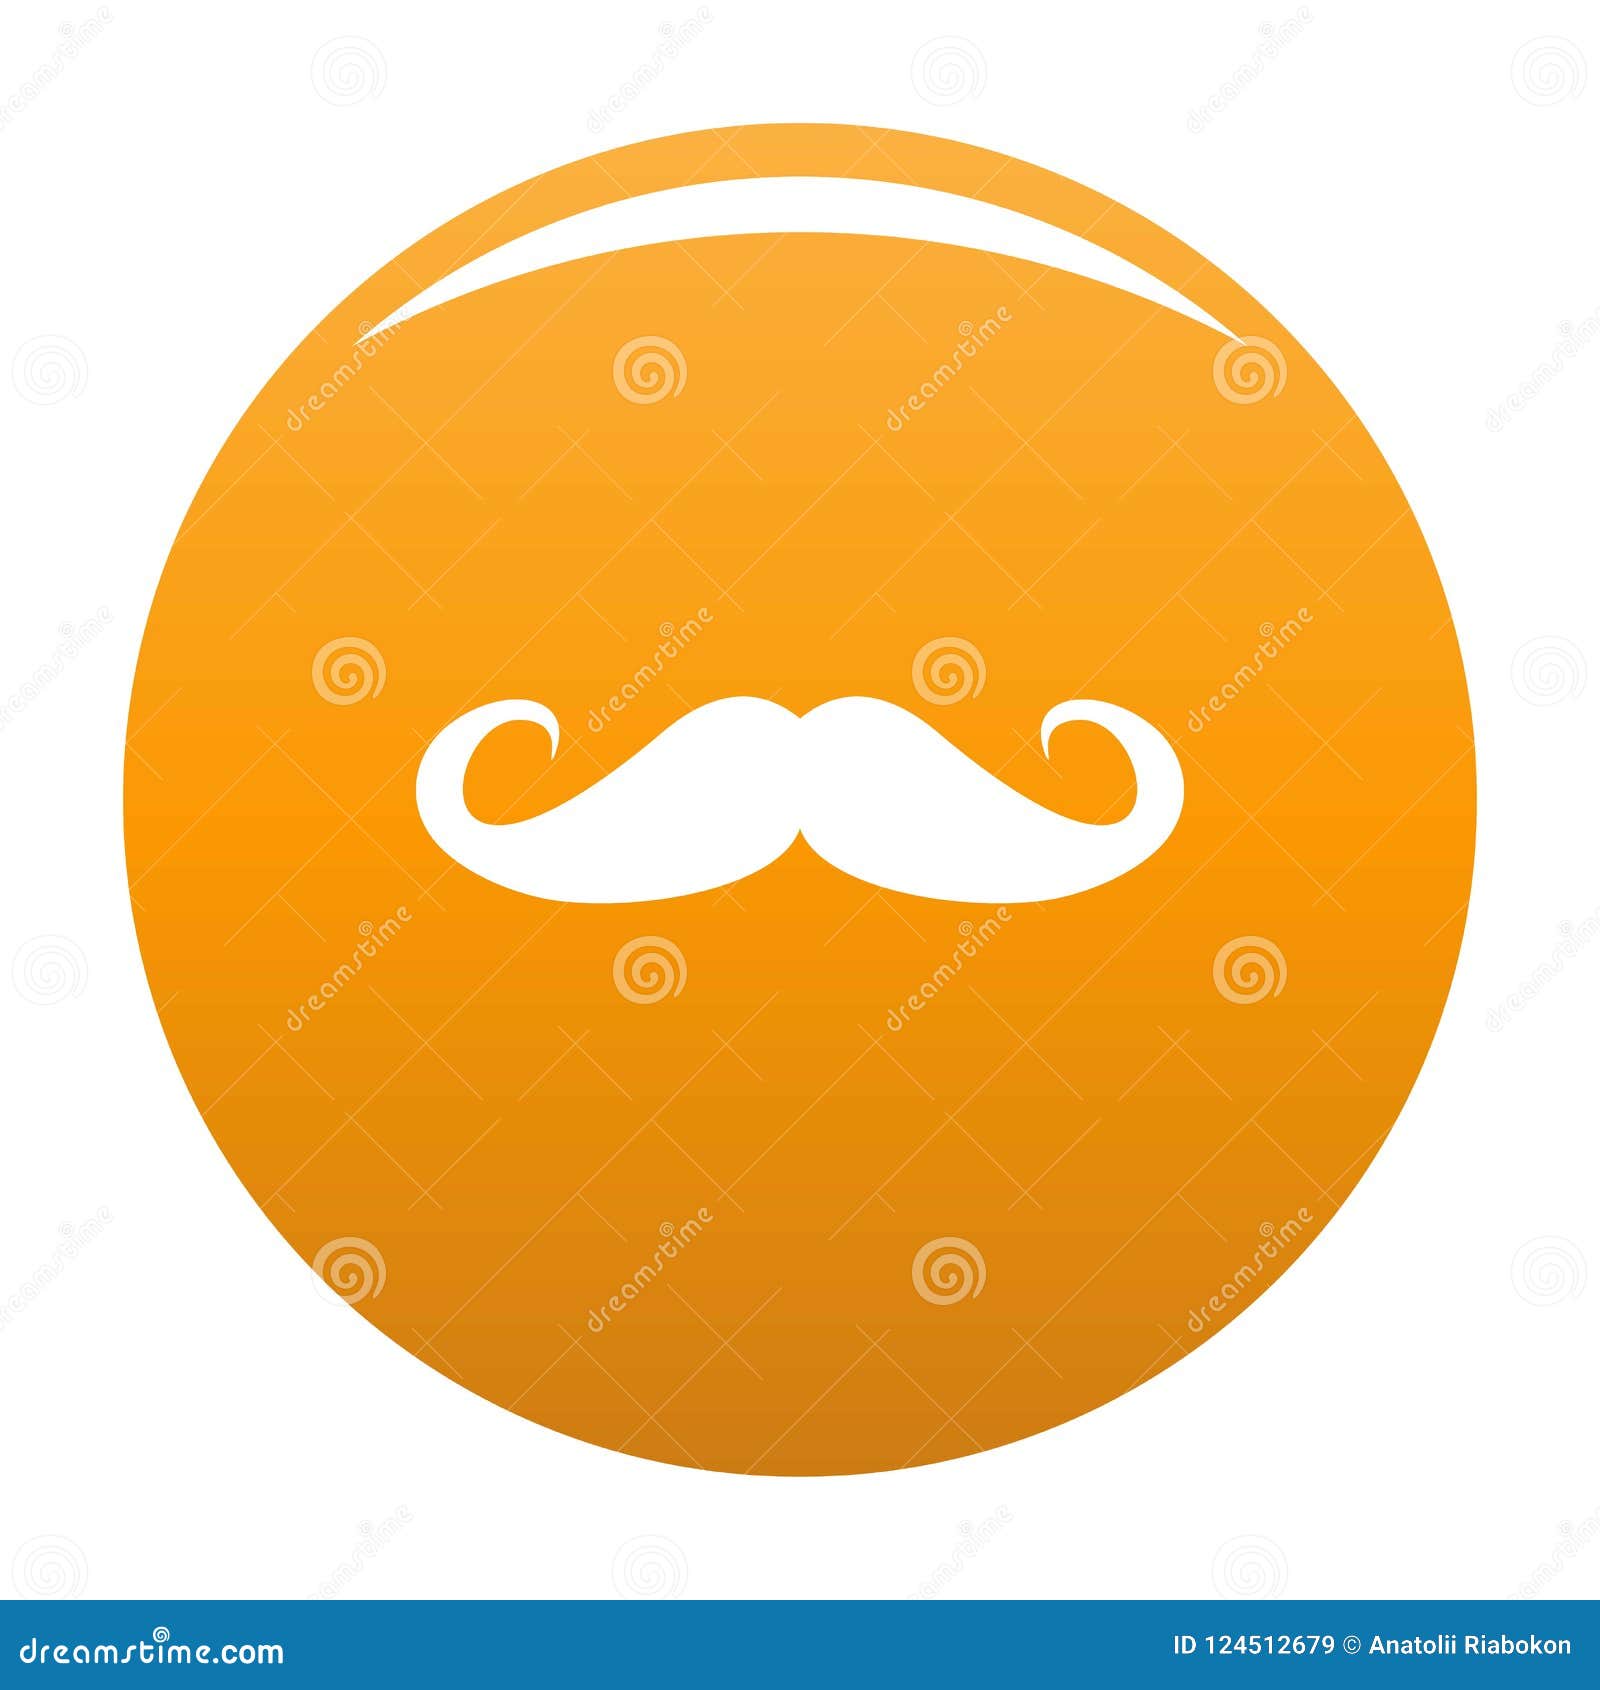 Heavy mustache icon orange stock illustration. Illustration of isolated ...